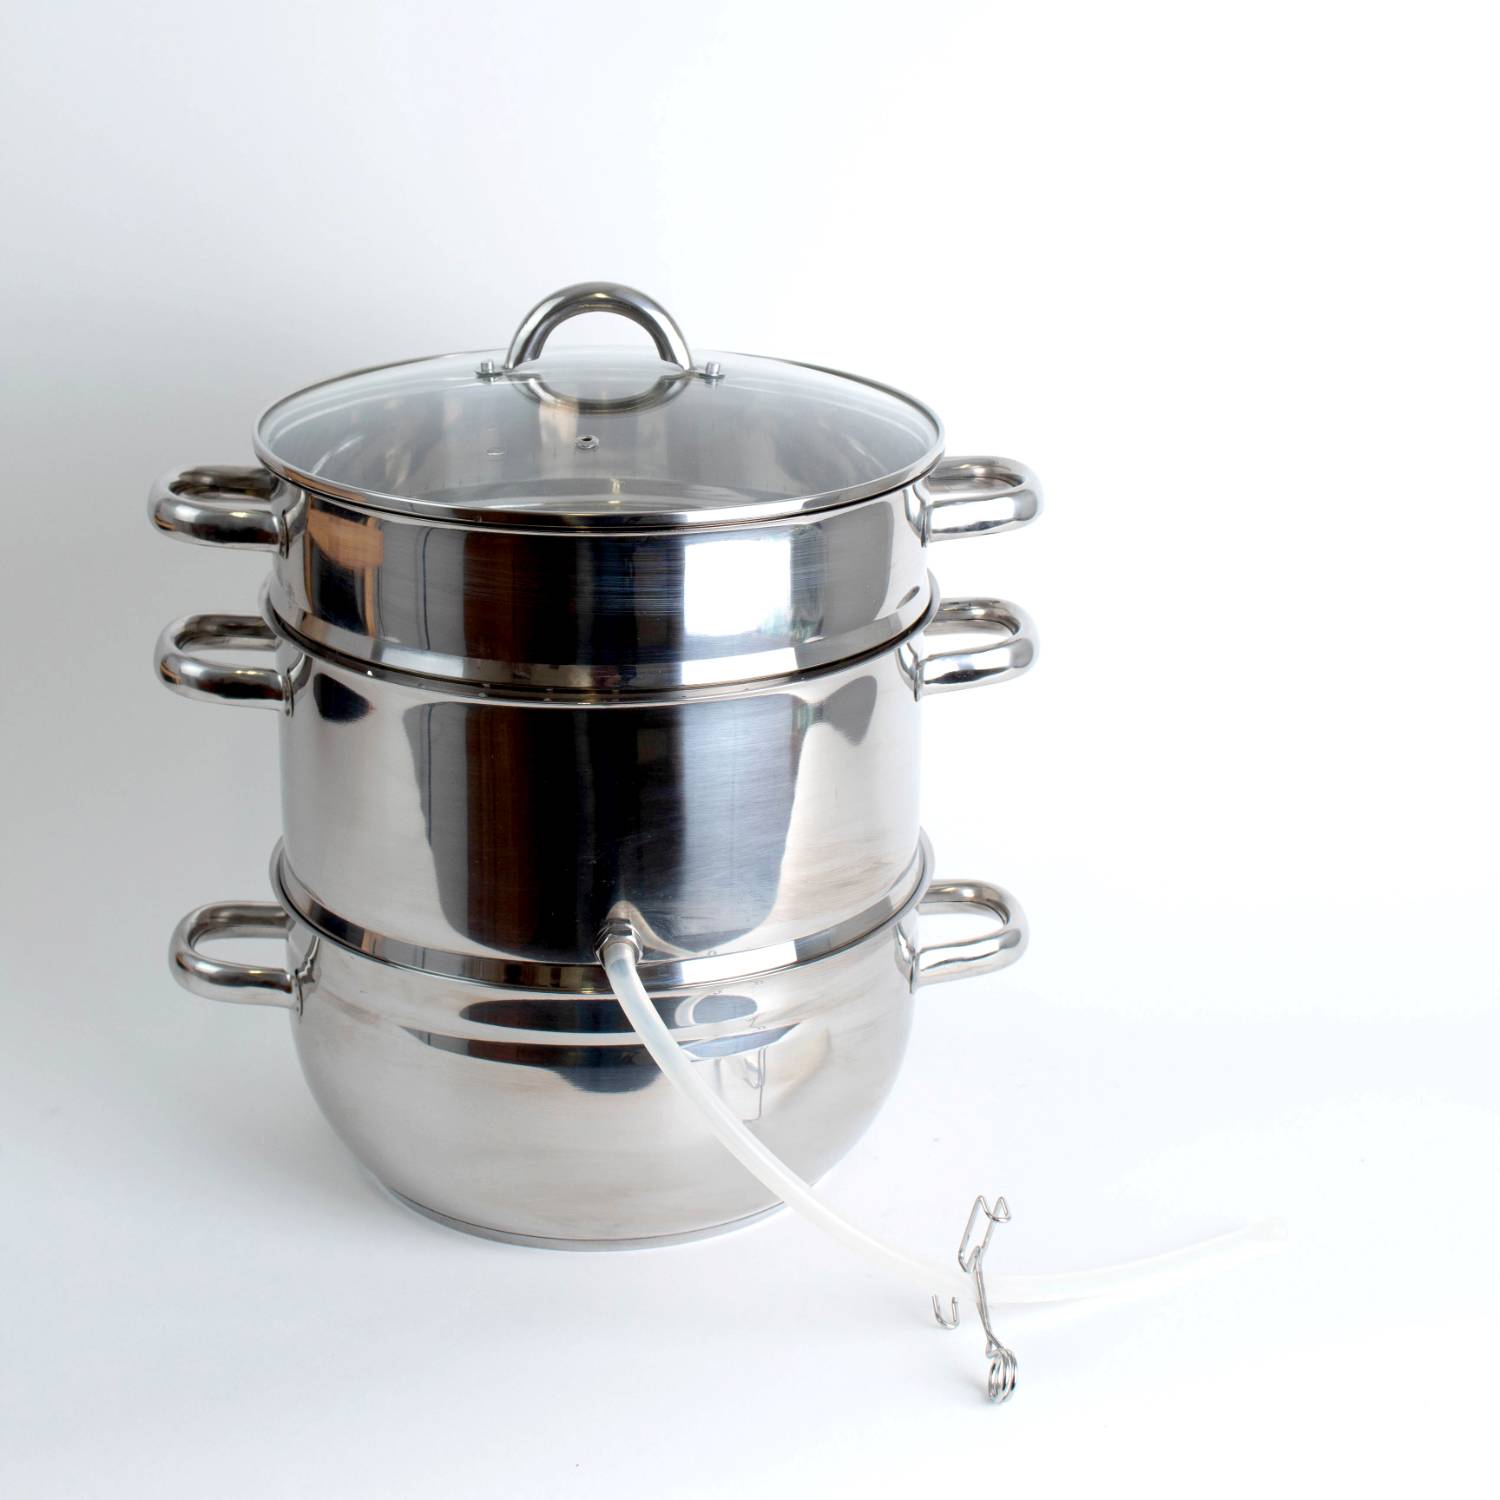 Cook N Home Basics Canning Juice Steamer Extractor Pot 11-Quart